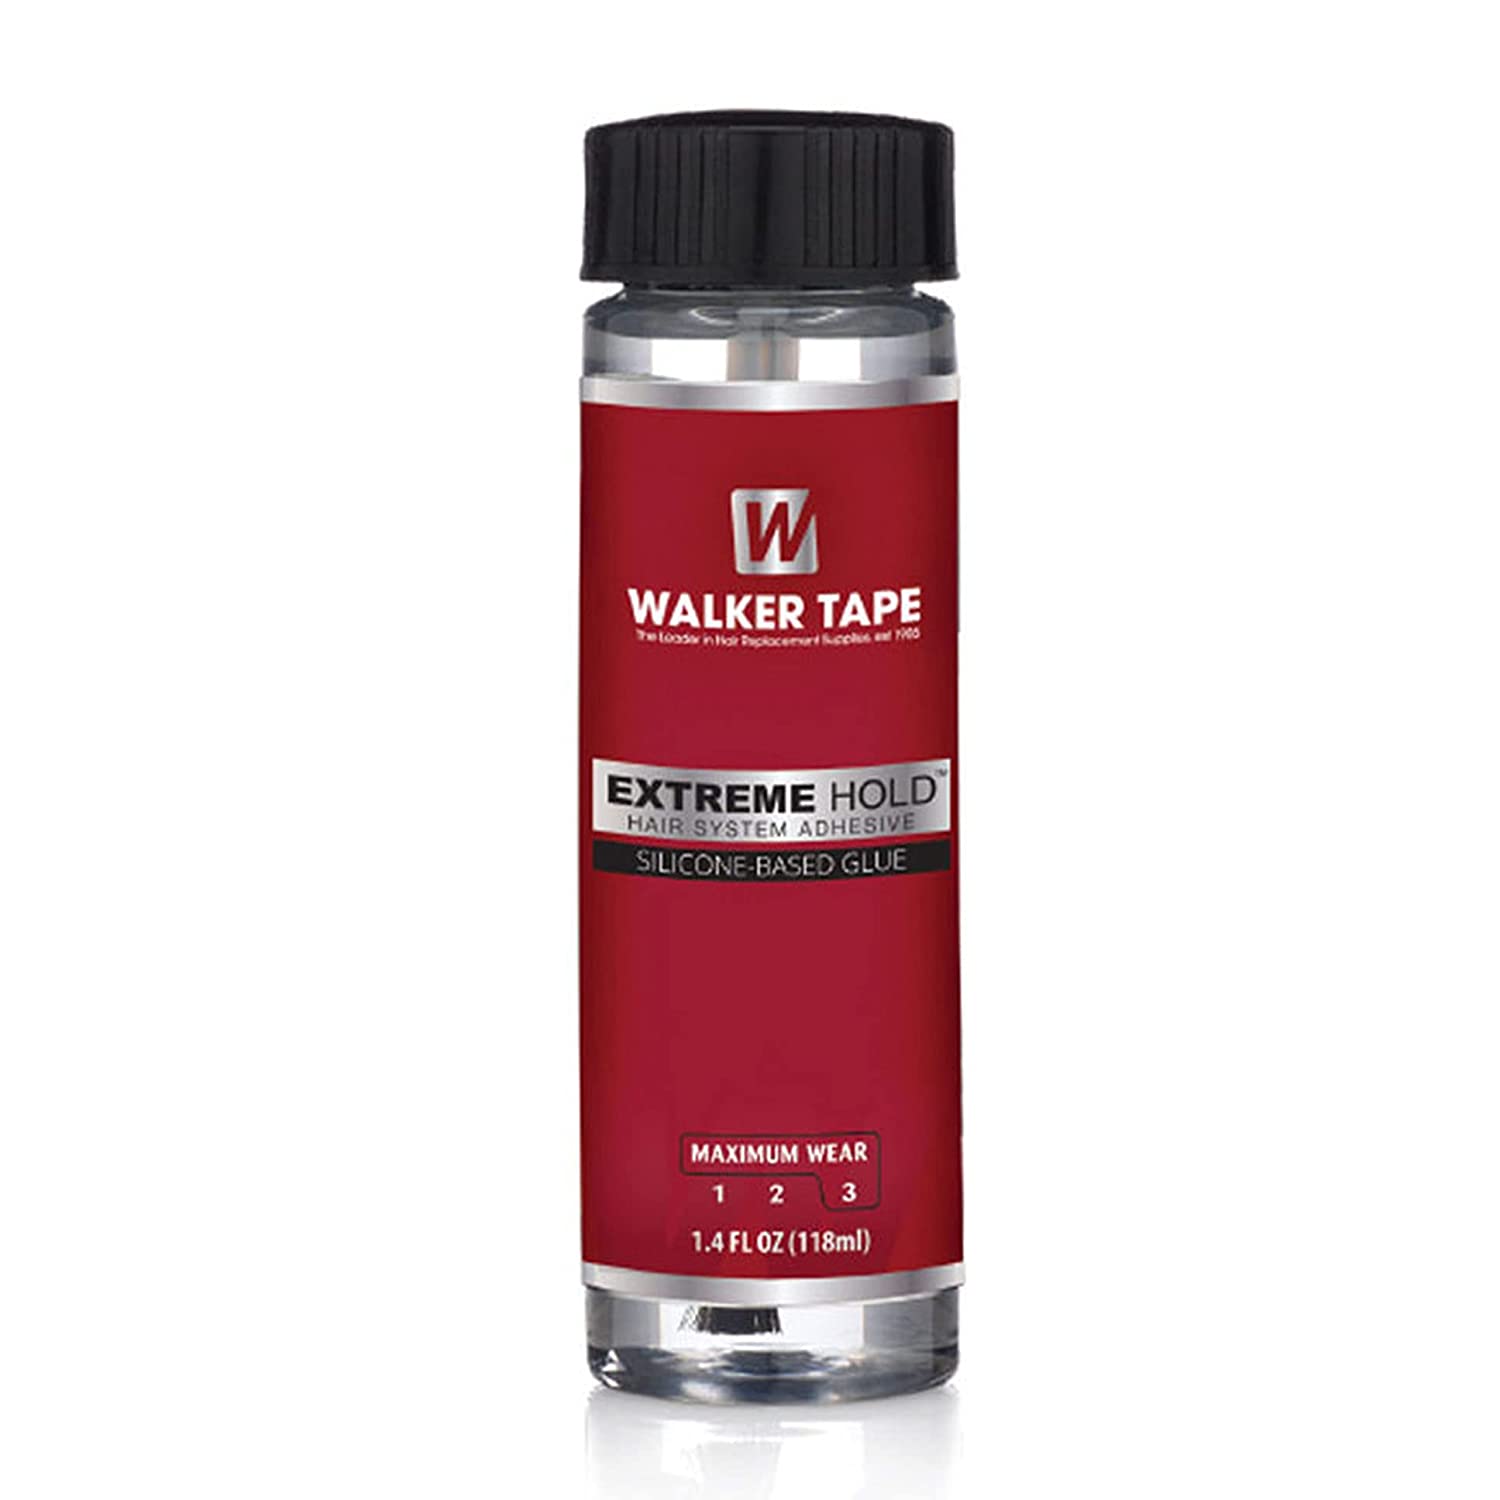 Walker Tape Mity-Tite Brush-on 0.5oz Liquid Adhesive (2-Pack)